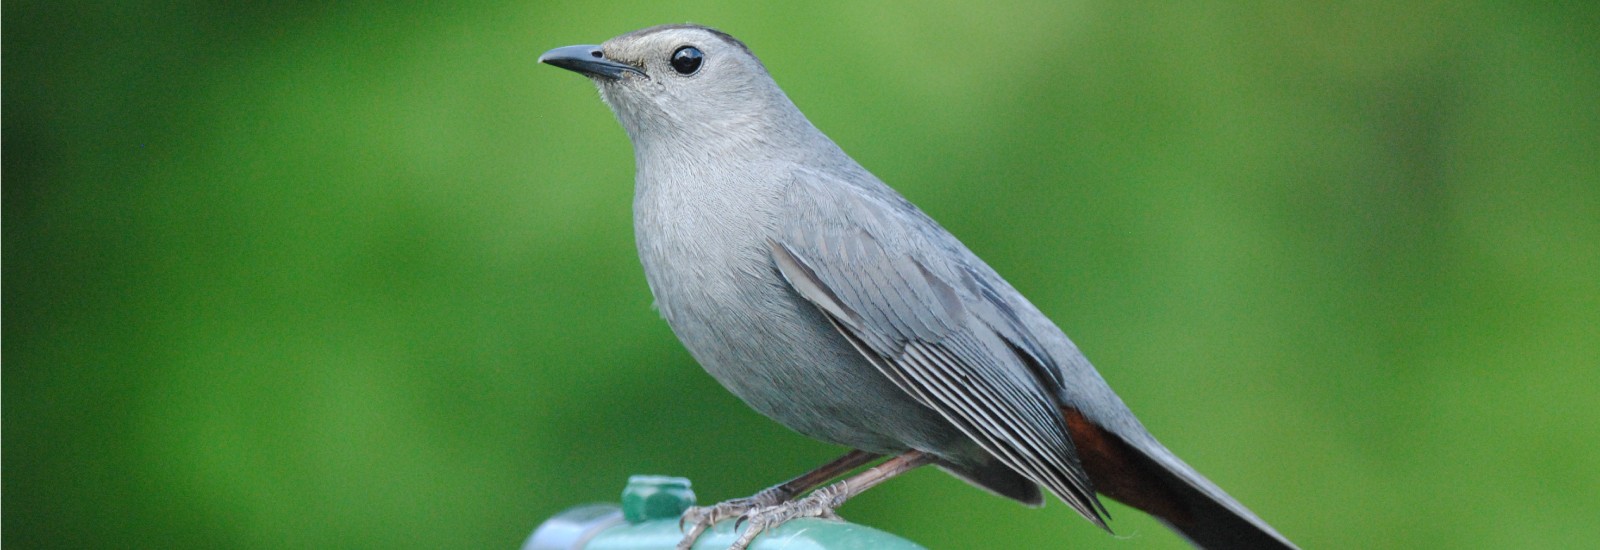 Photo of gray bird.